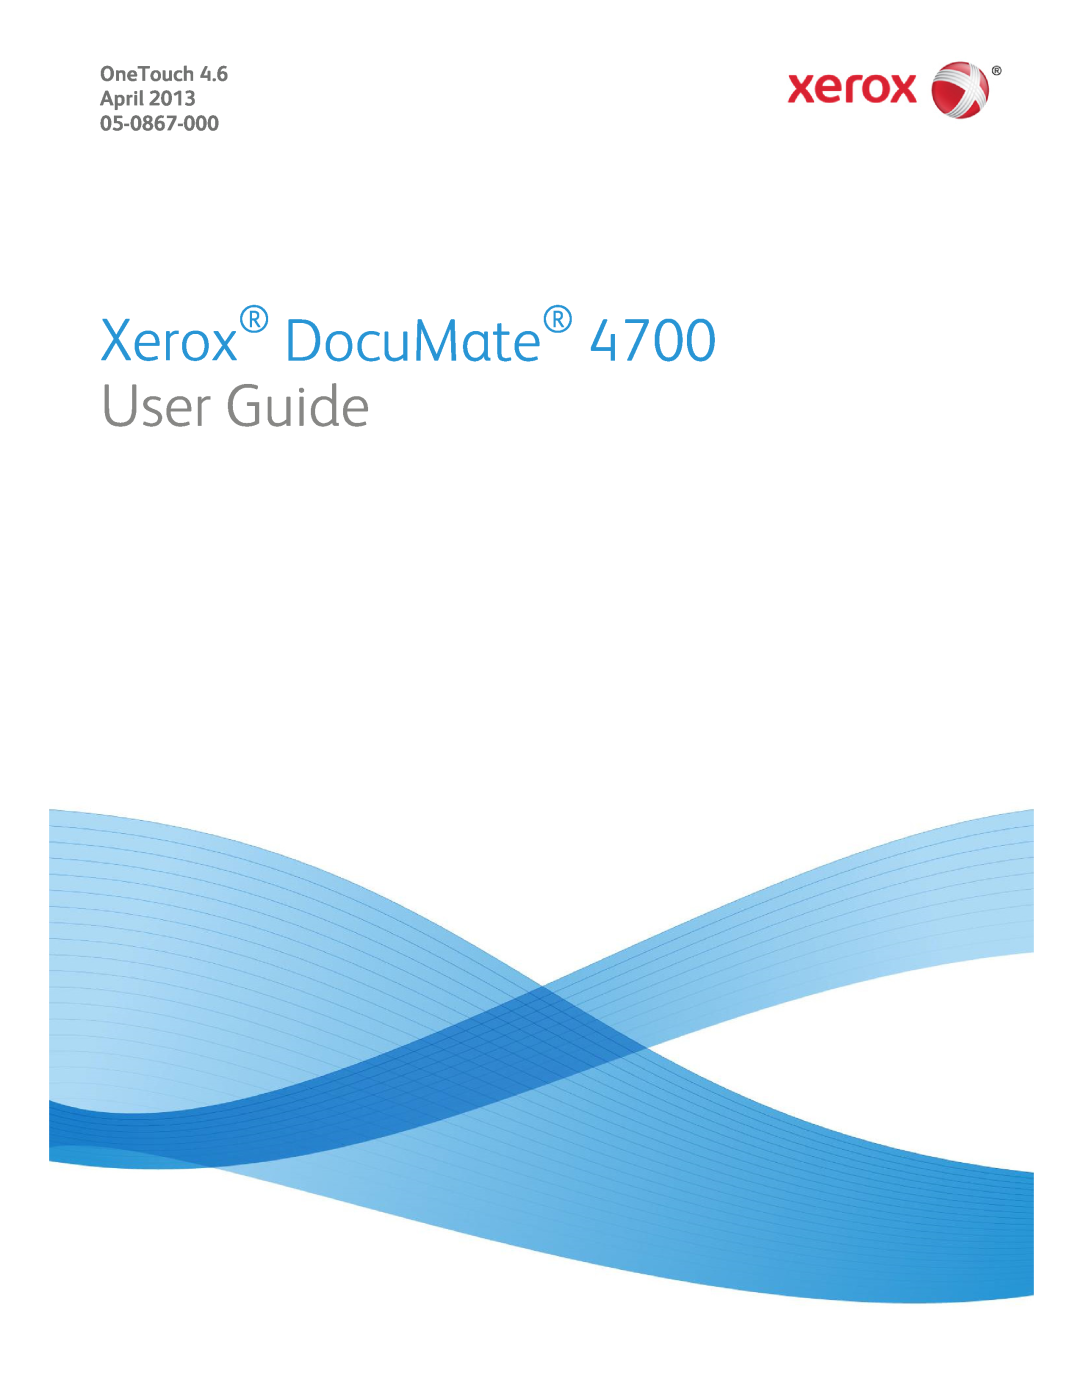 Xerox 4700 manual Xerox DocuMate, User Guide, OneTouch 4.6 April 05-0867-000 